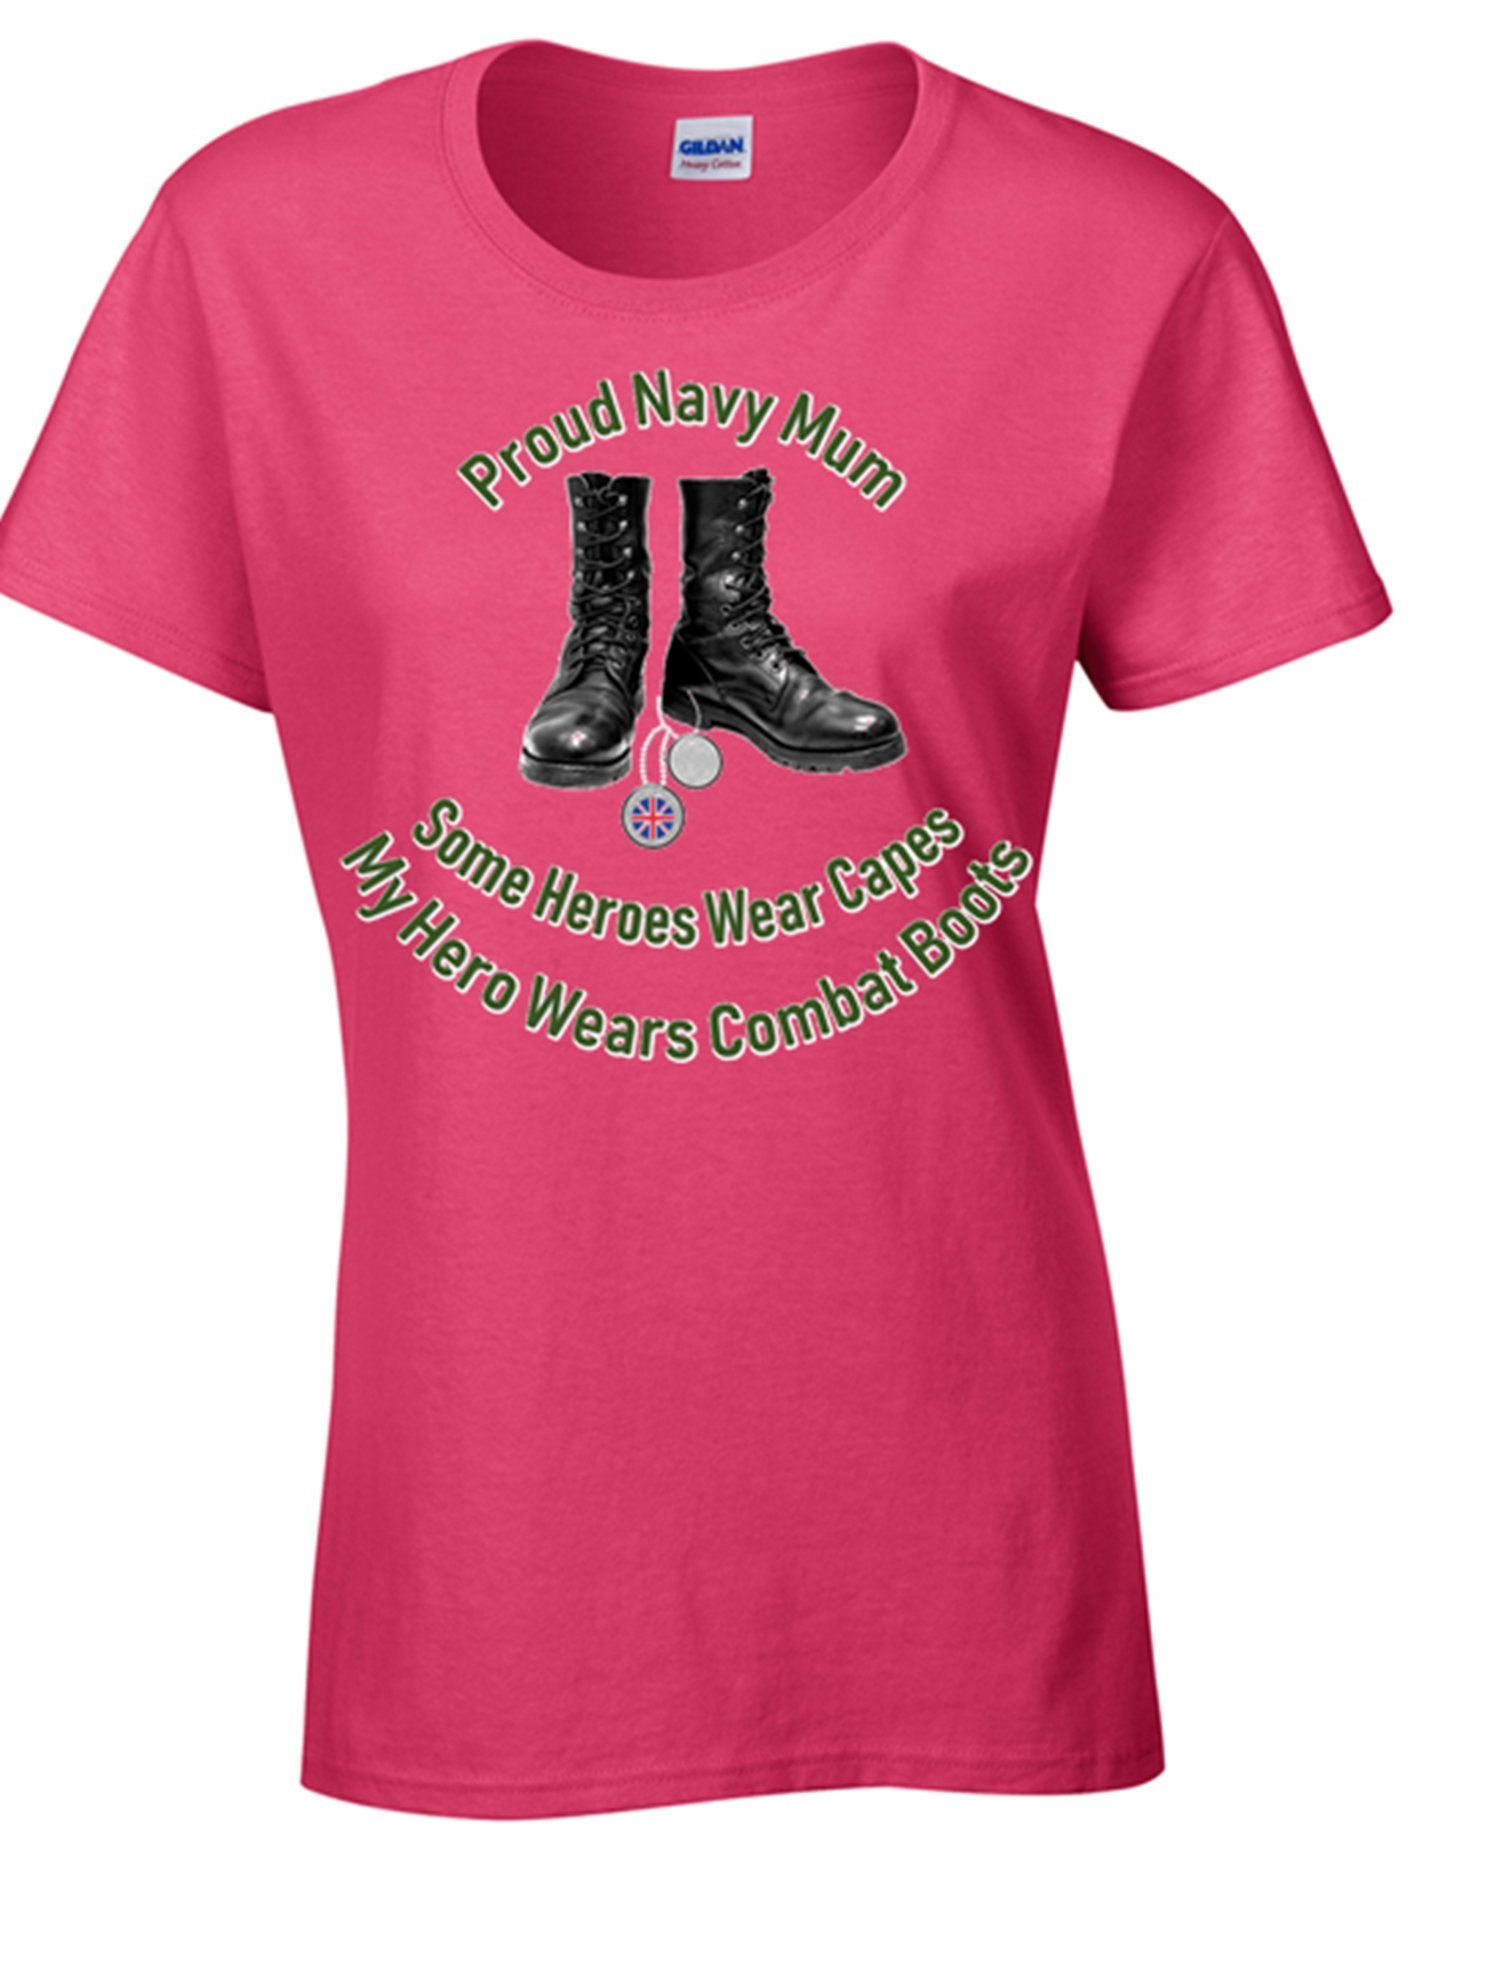 Bear Essentials Clothing Proud Navy Mum T-Shirt - Army 1157 kit Pink / S Army 1157 Kit